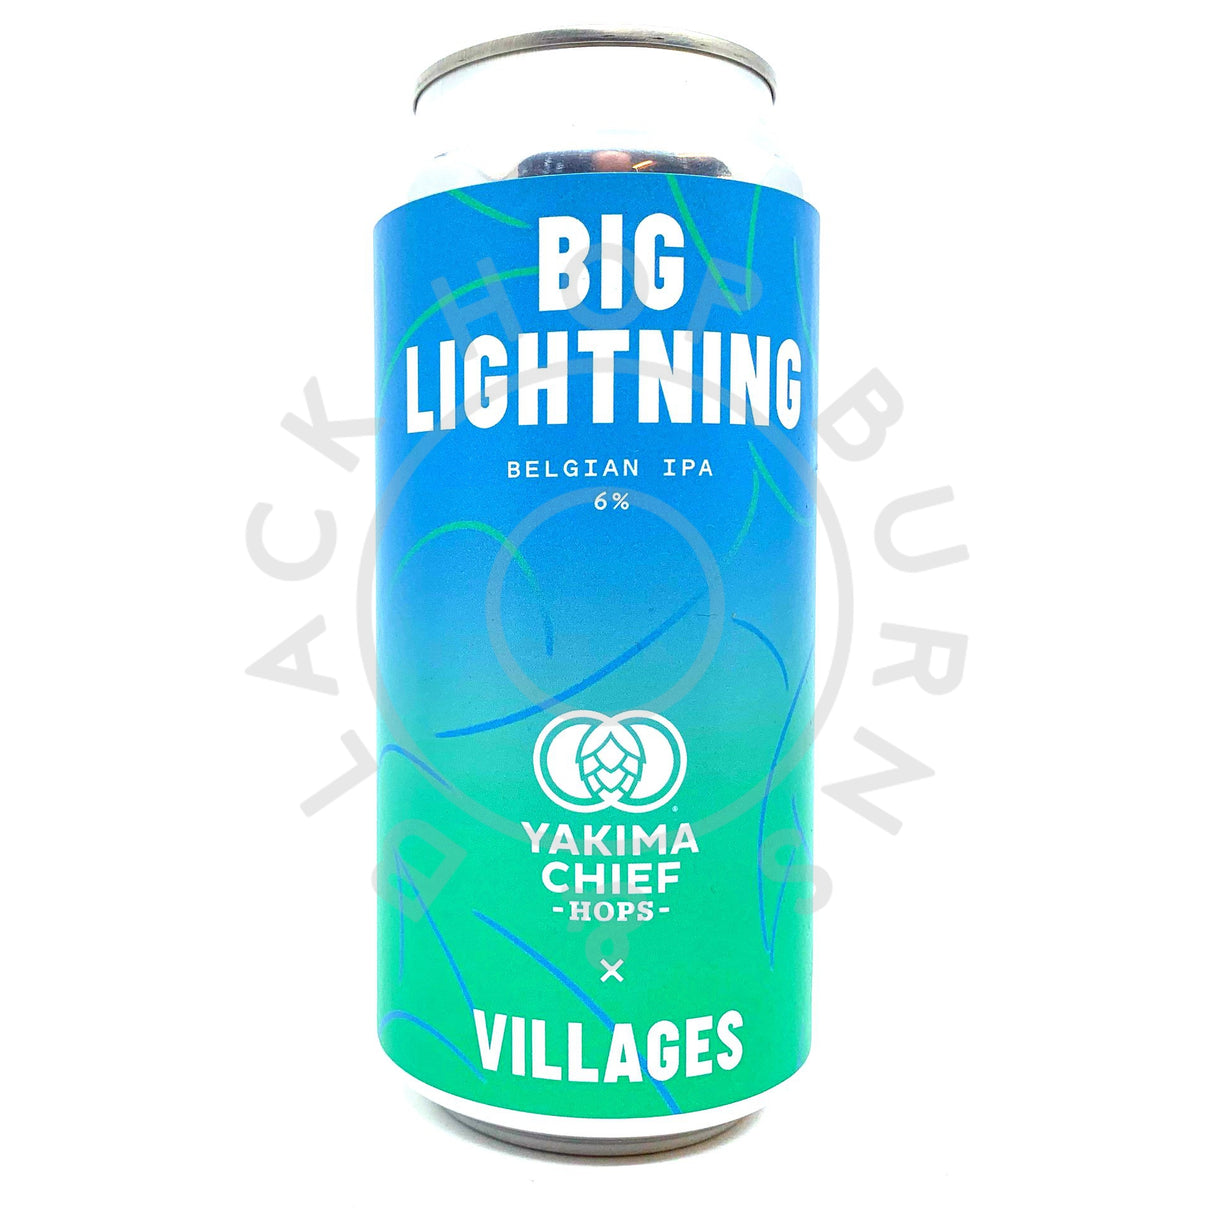 Villages Big Lightning Belgian IPA 6% (440ml can)-Hop Burns & Black